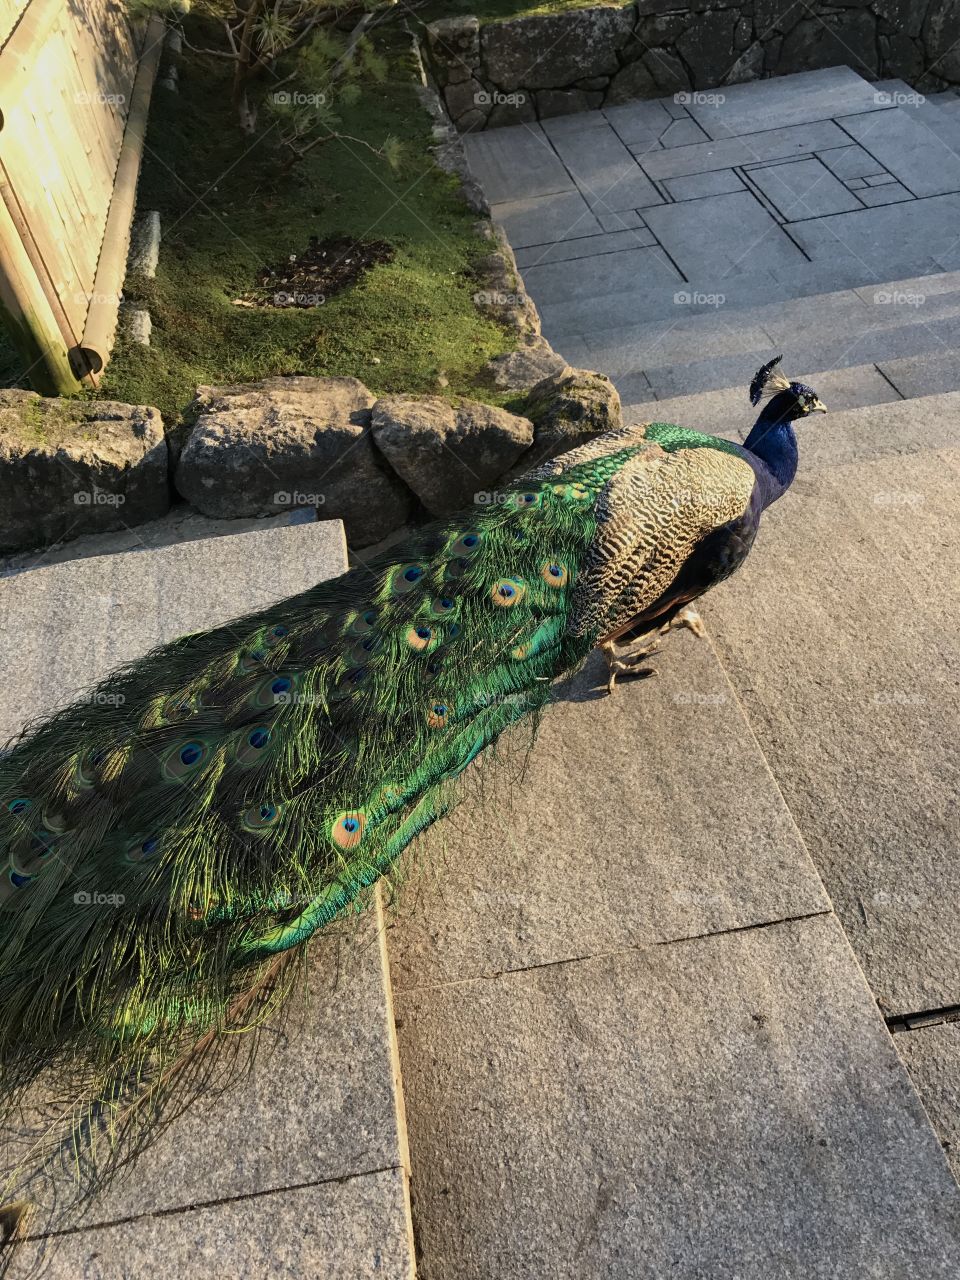 peacock
london
holland park
colourful
sunset
